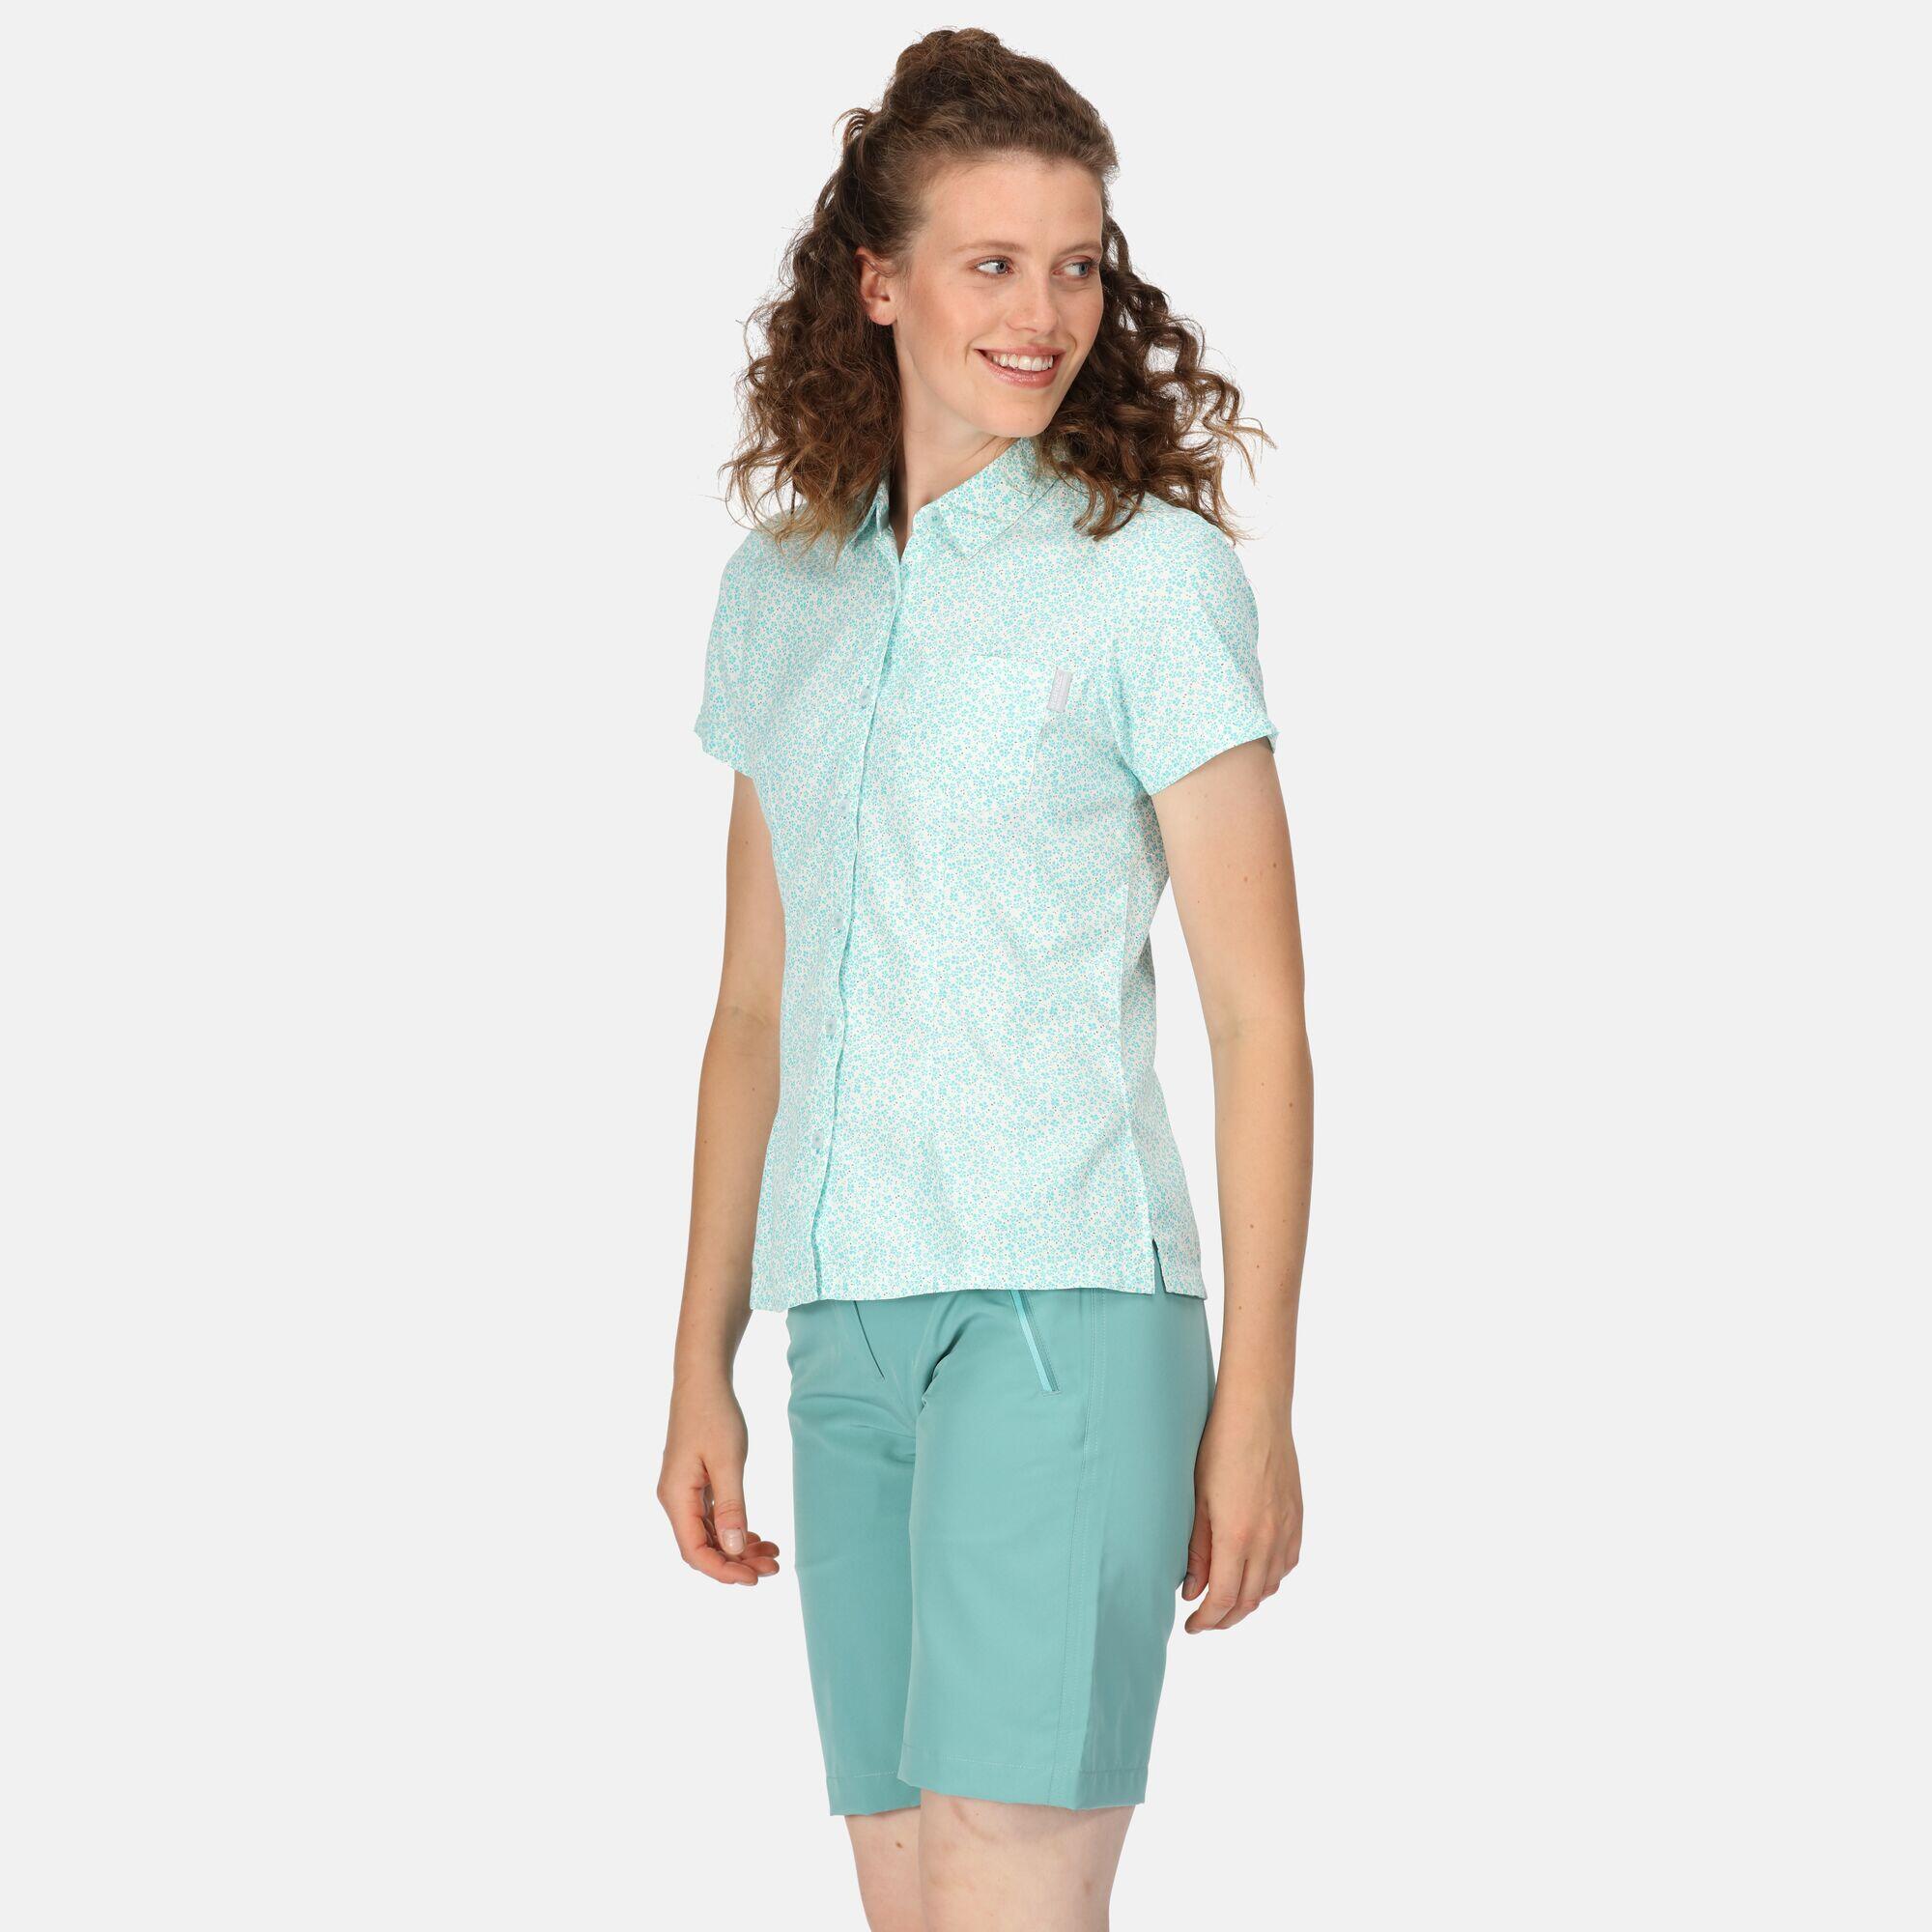 Mindano VII Women's Walking Short Sleeve Shirt 1/7